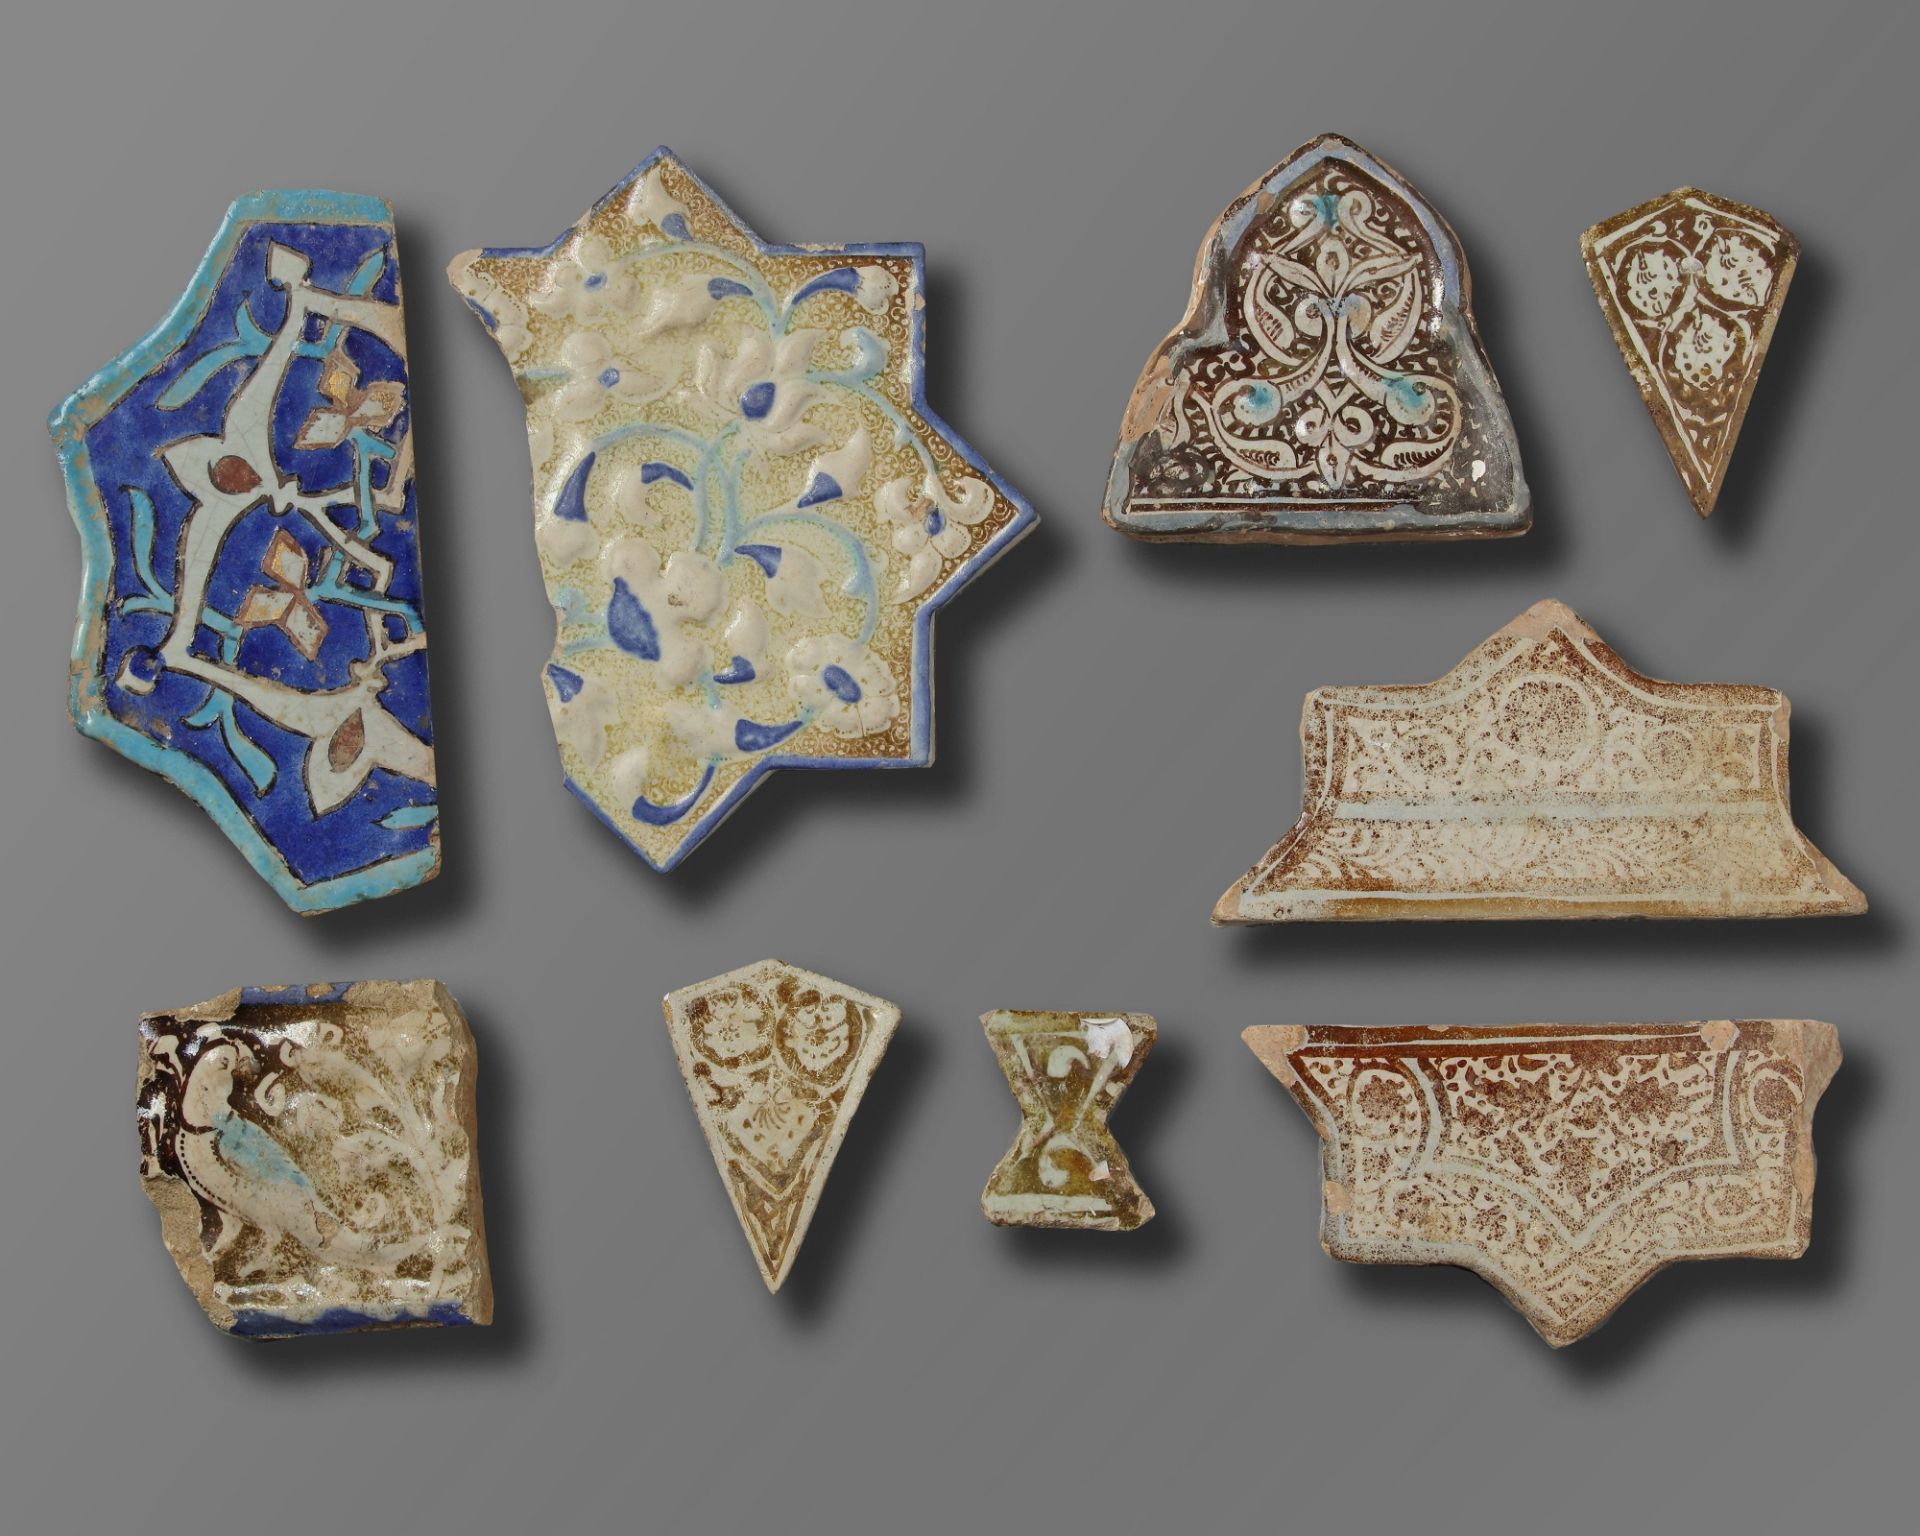 A group of nine Islamic pottery tiles